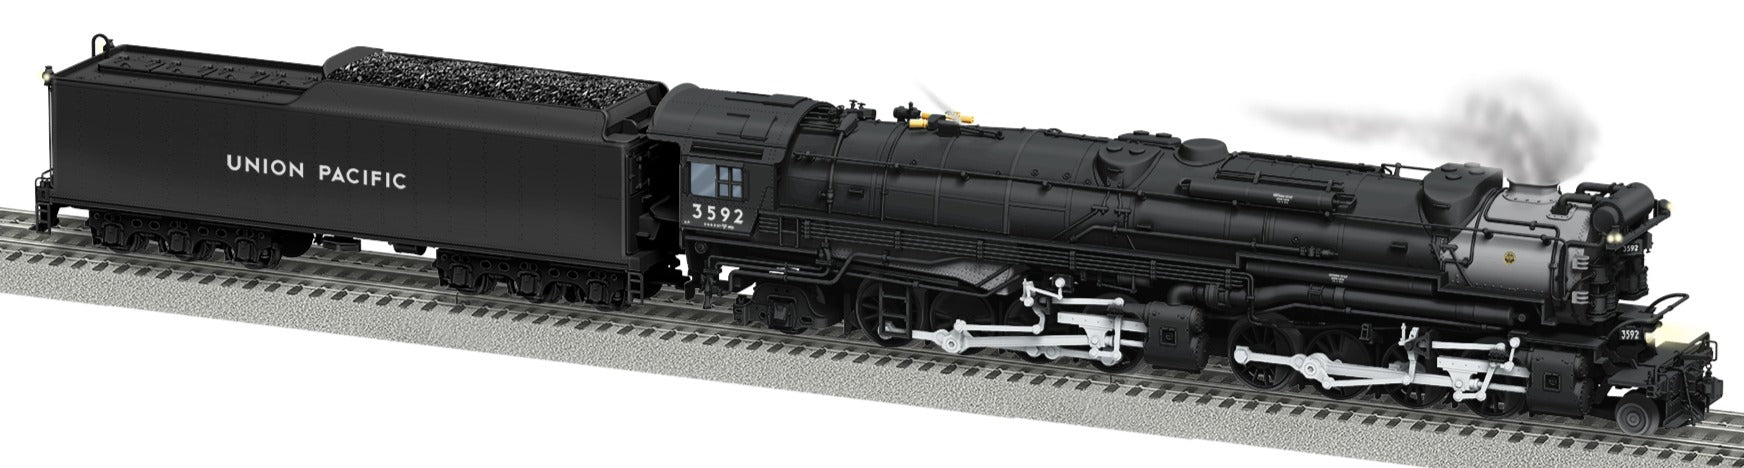 Lionel 2431612 - Legacy H7 2-8-8-2 Steam Locomotive "Union Pacific" #3592